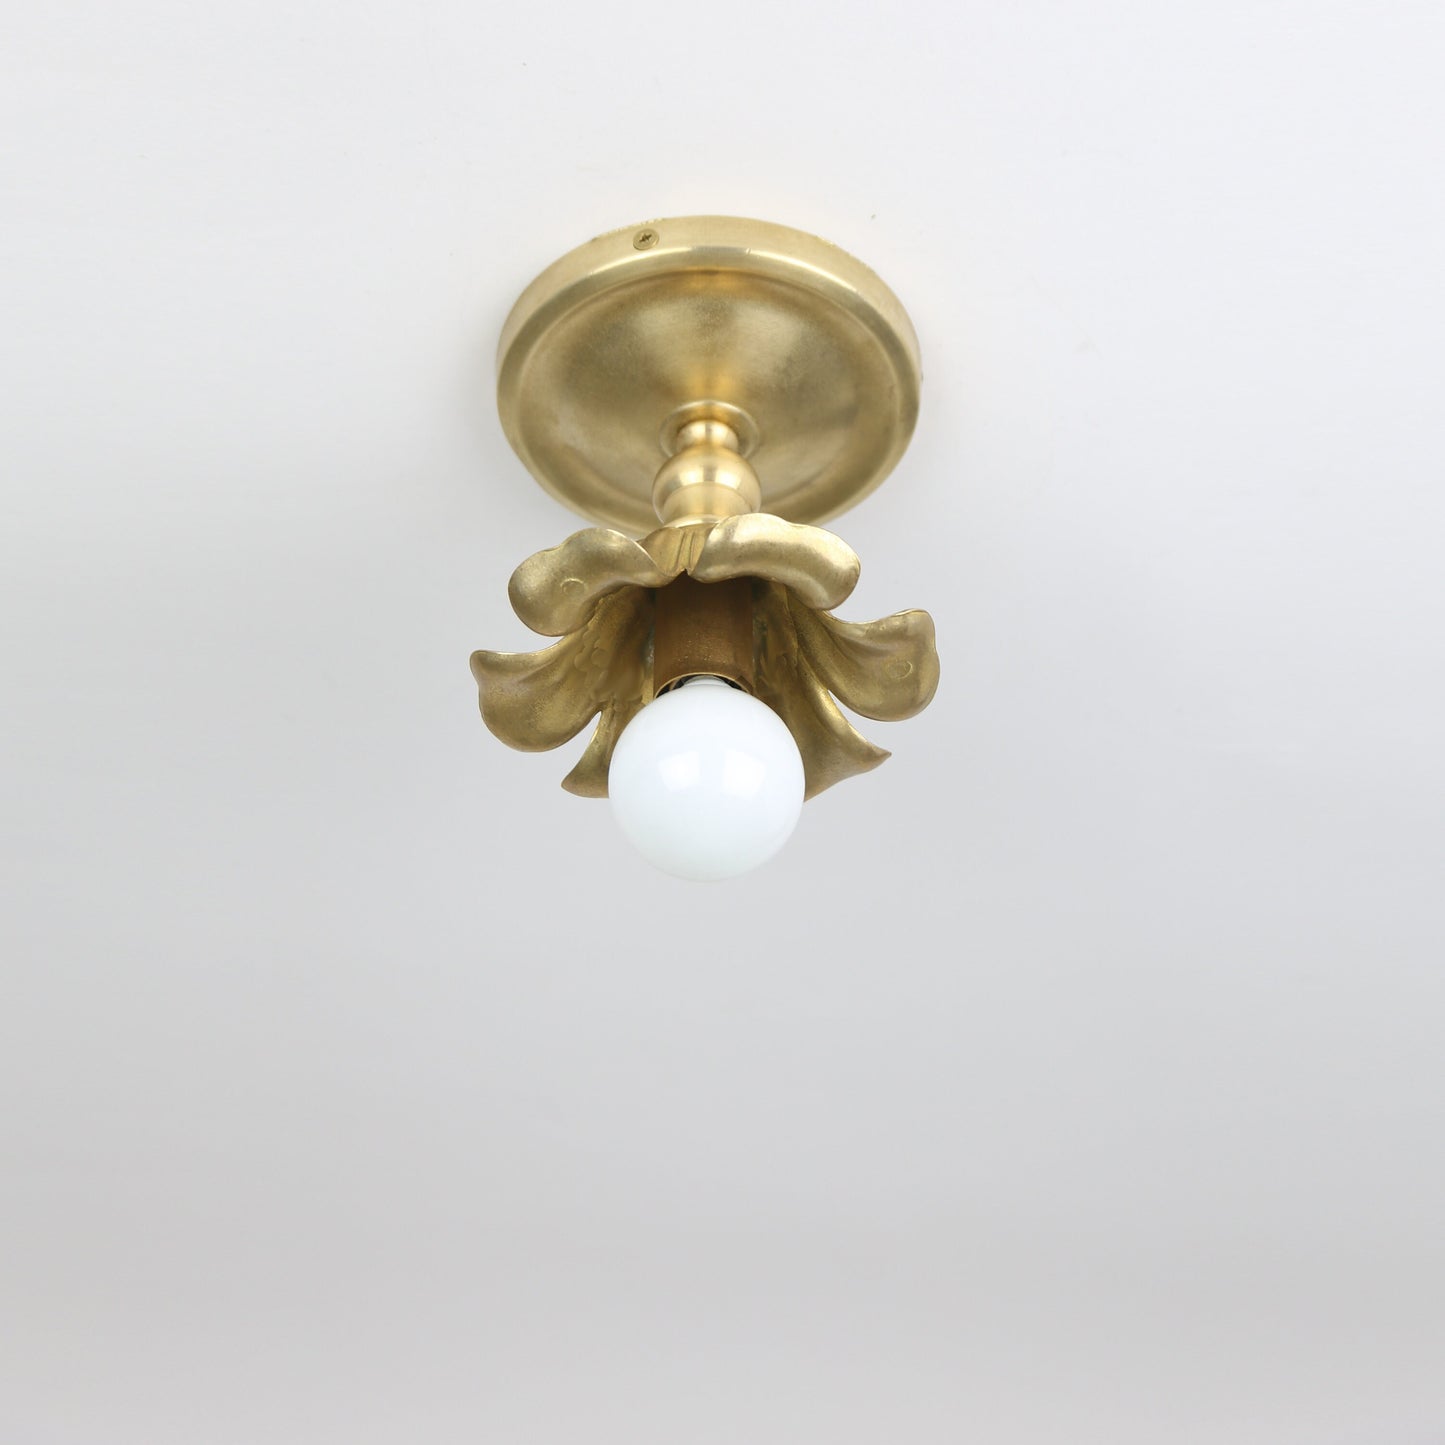 Brass ceiling light with flower shape lamp holder, Classic brass ceiling light